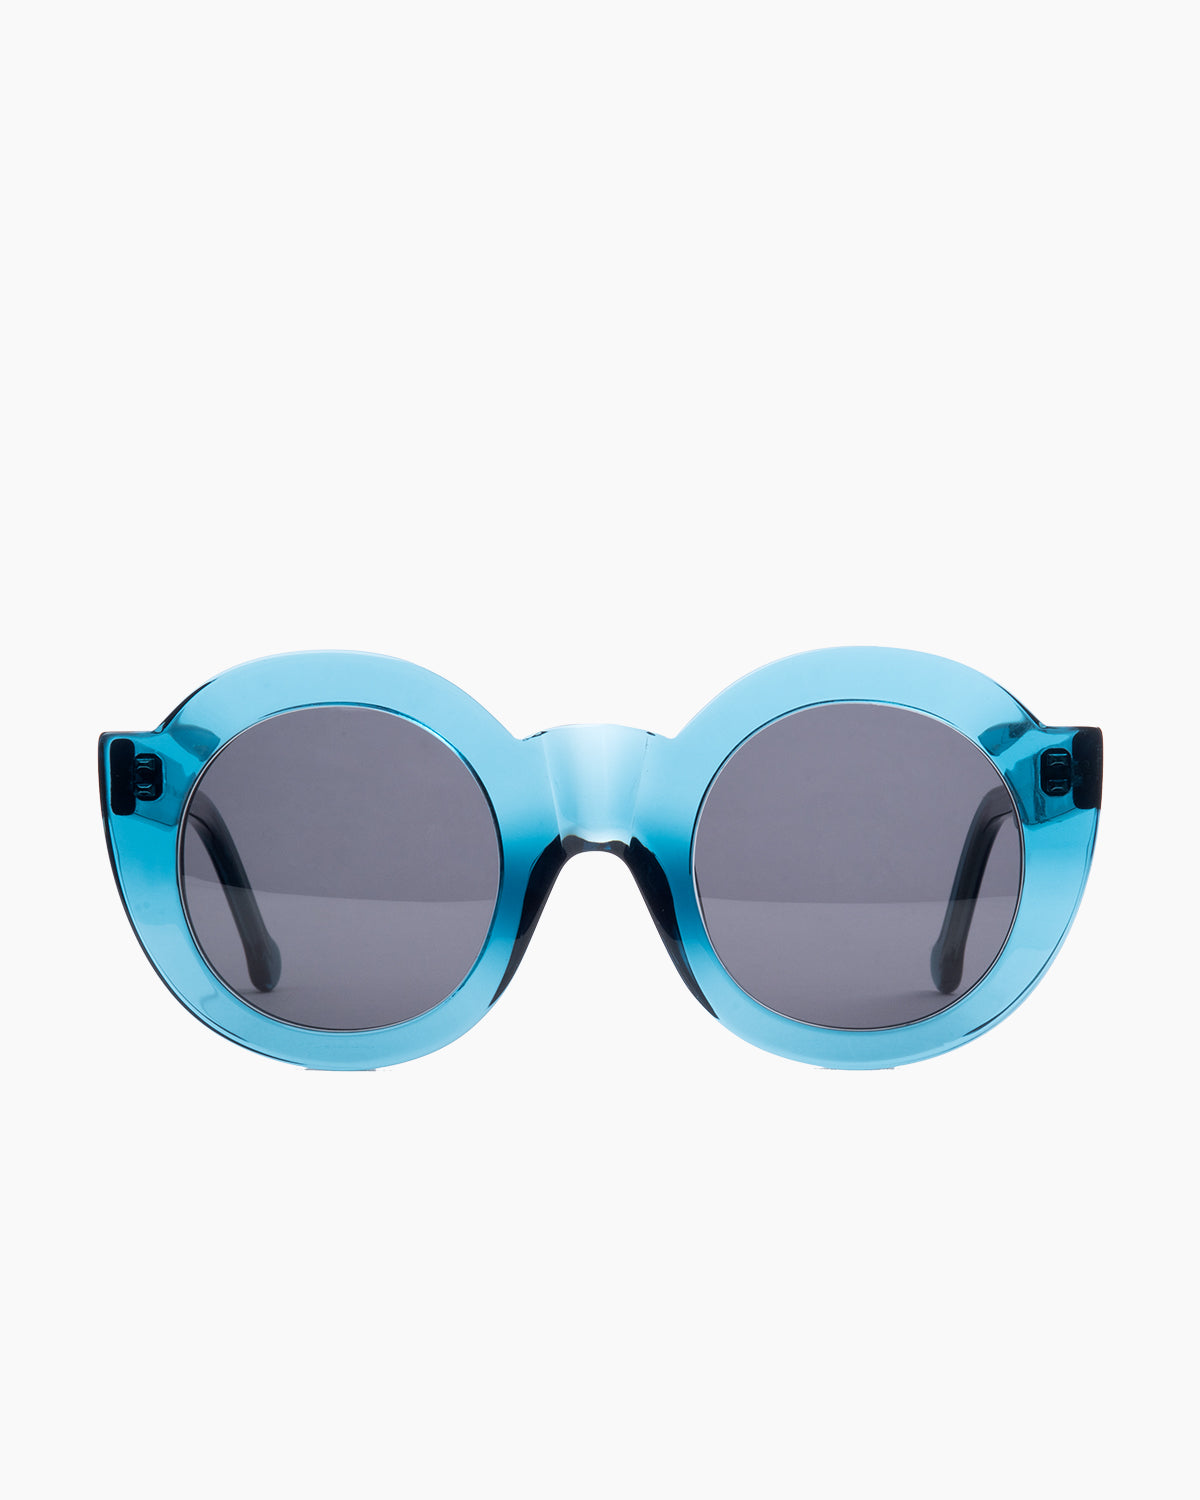 Marie-Sophie Dion - CollSun - Blue | glasses bar:  Marie-Sophie Dion